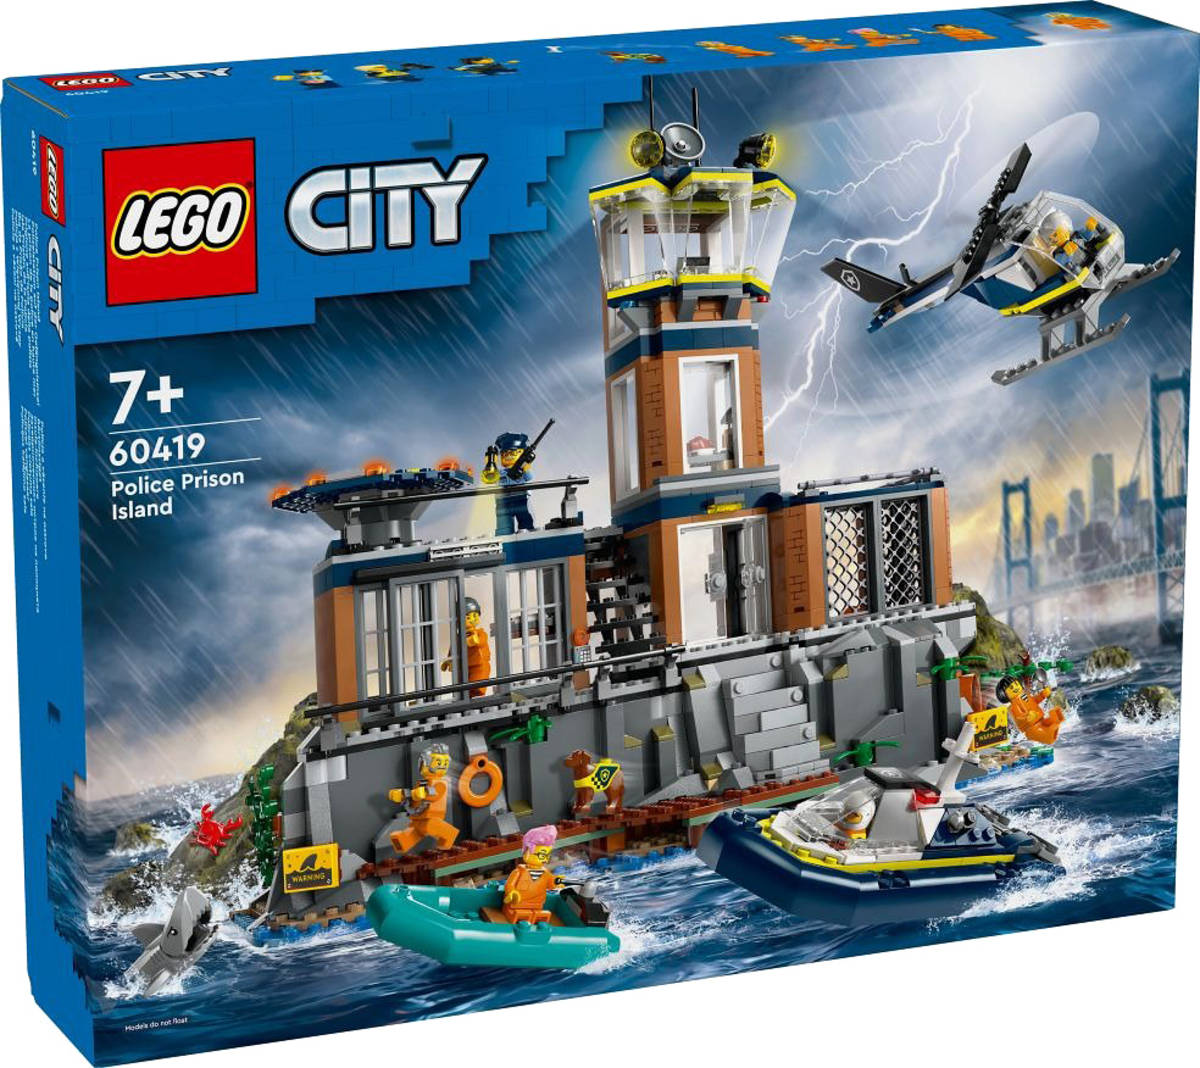 LEGO CITY Policie a vìzení na ostrovì 60419 STAVEBNICE - zvìtšit obrázek